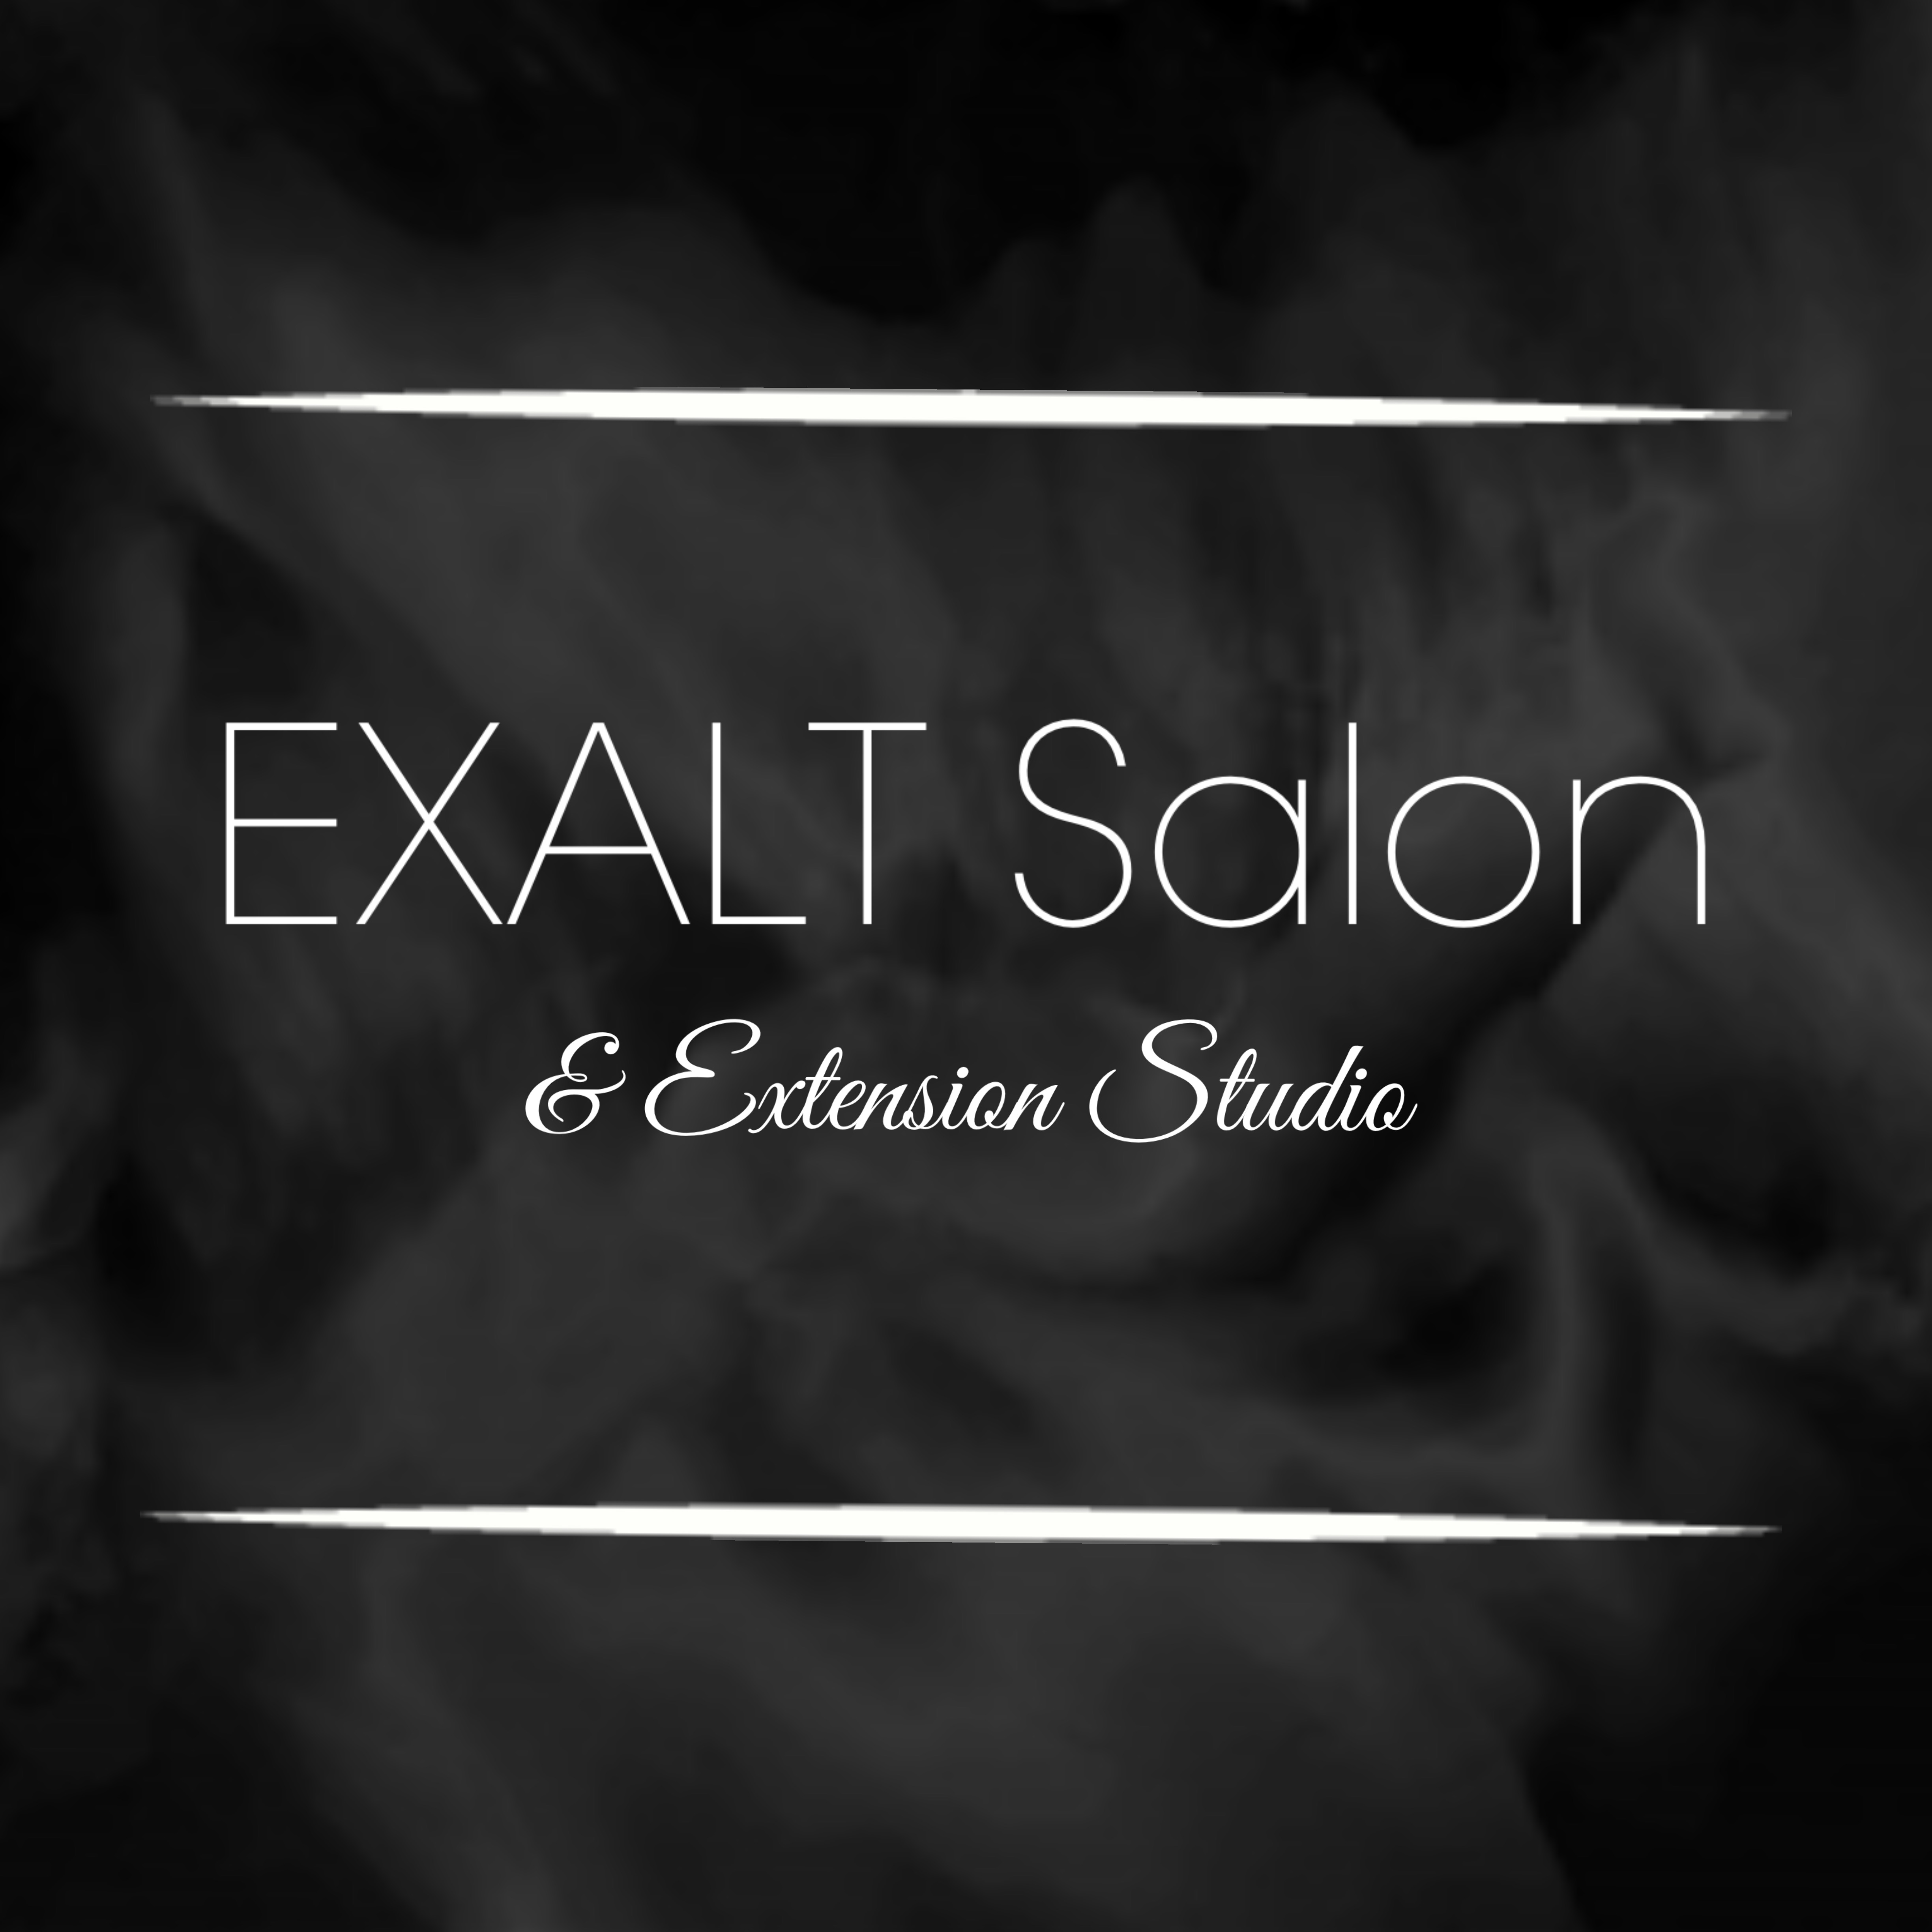 www.exaltsalon.com